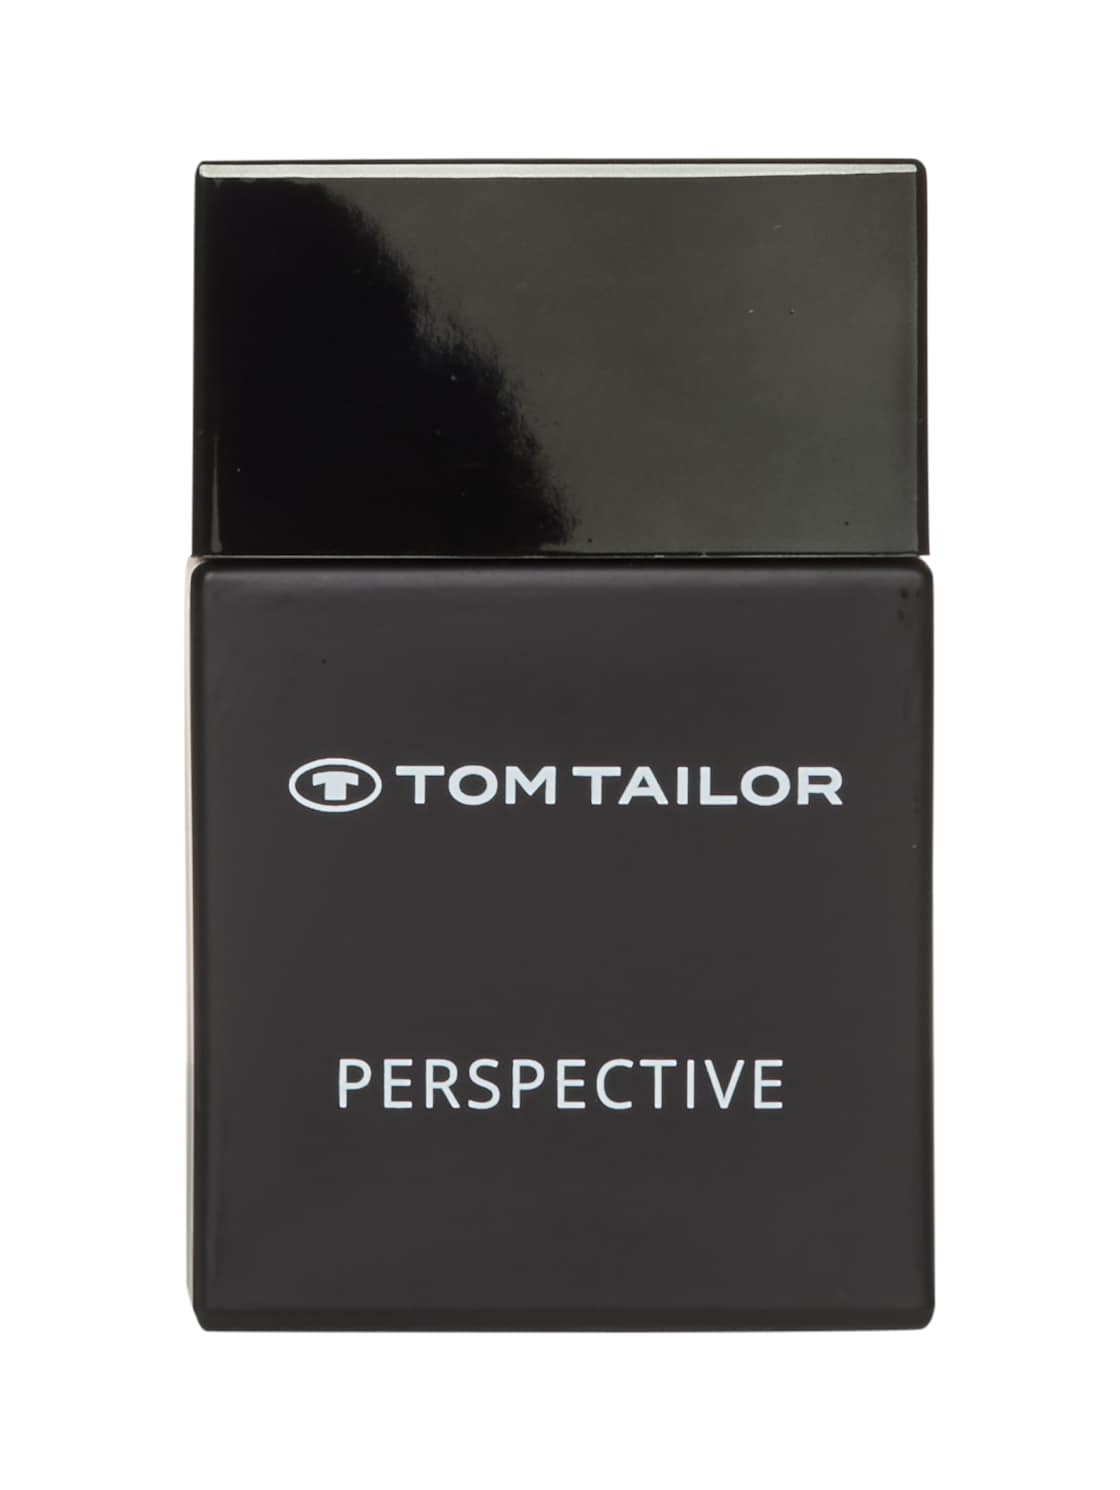 TOM TAILOR Herren Perspective Eau de Toilette 30ml, weiß, Uni, Gr. ONESIZE von Tom Tailor